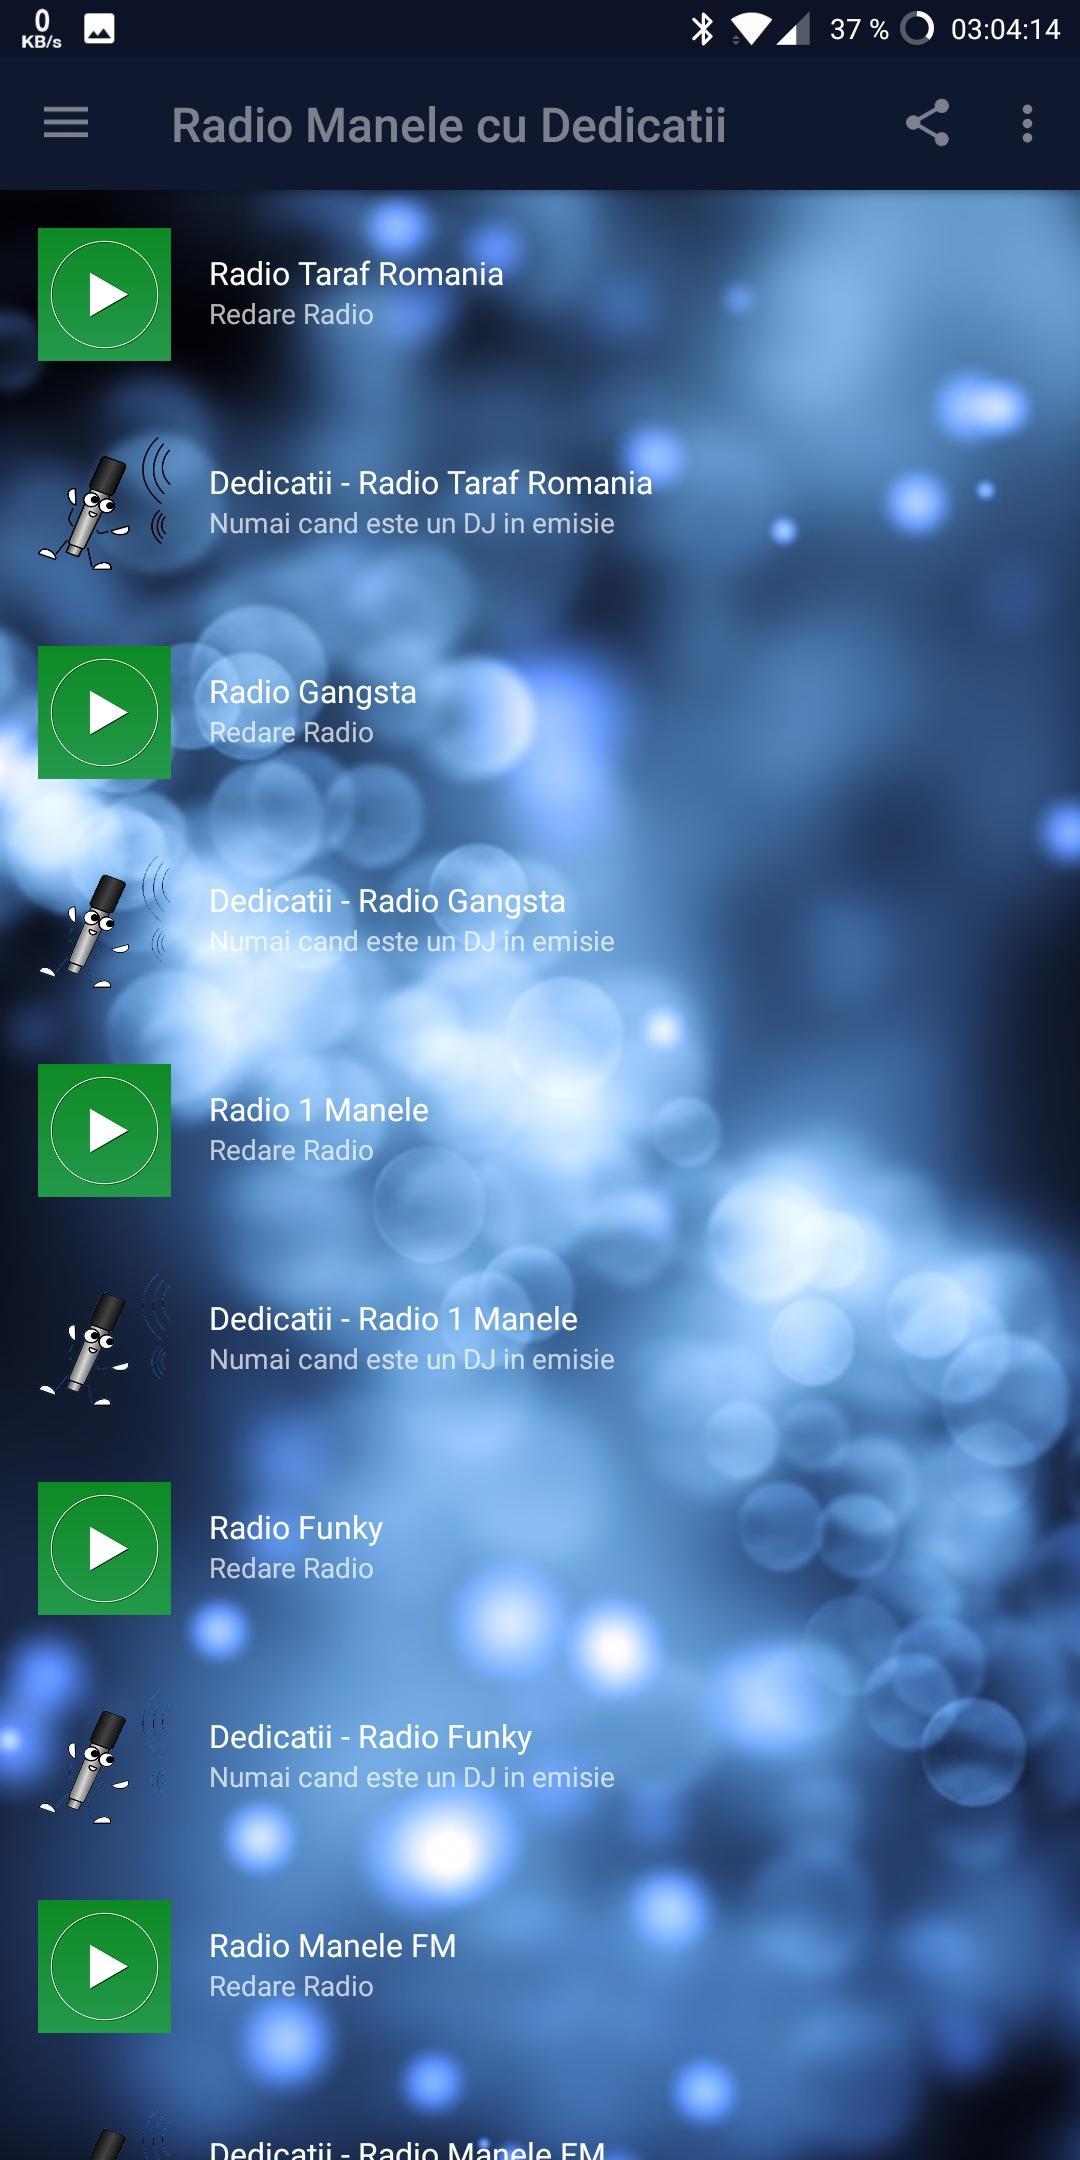 Radio Manele cu Dedicatii for Android - APK Download